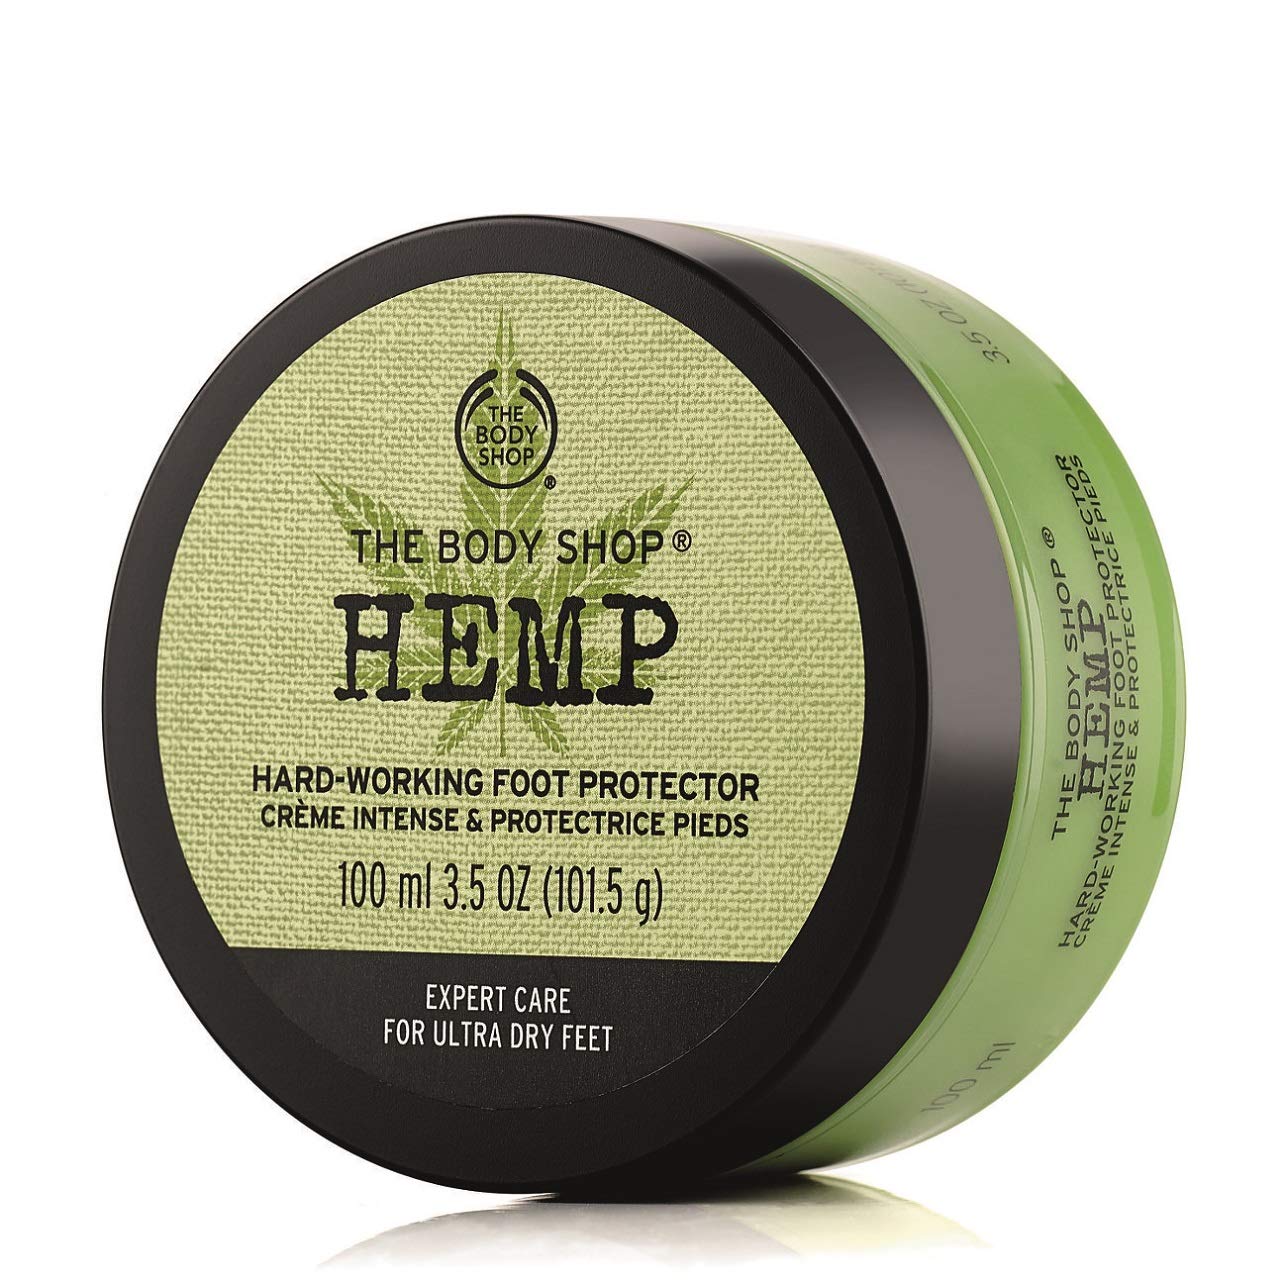 Hemp Foot Protector Cream For Very Dry Skin With Hemp Seed Oil